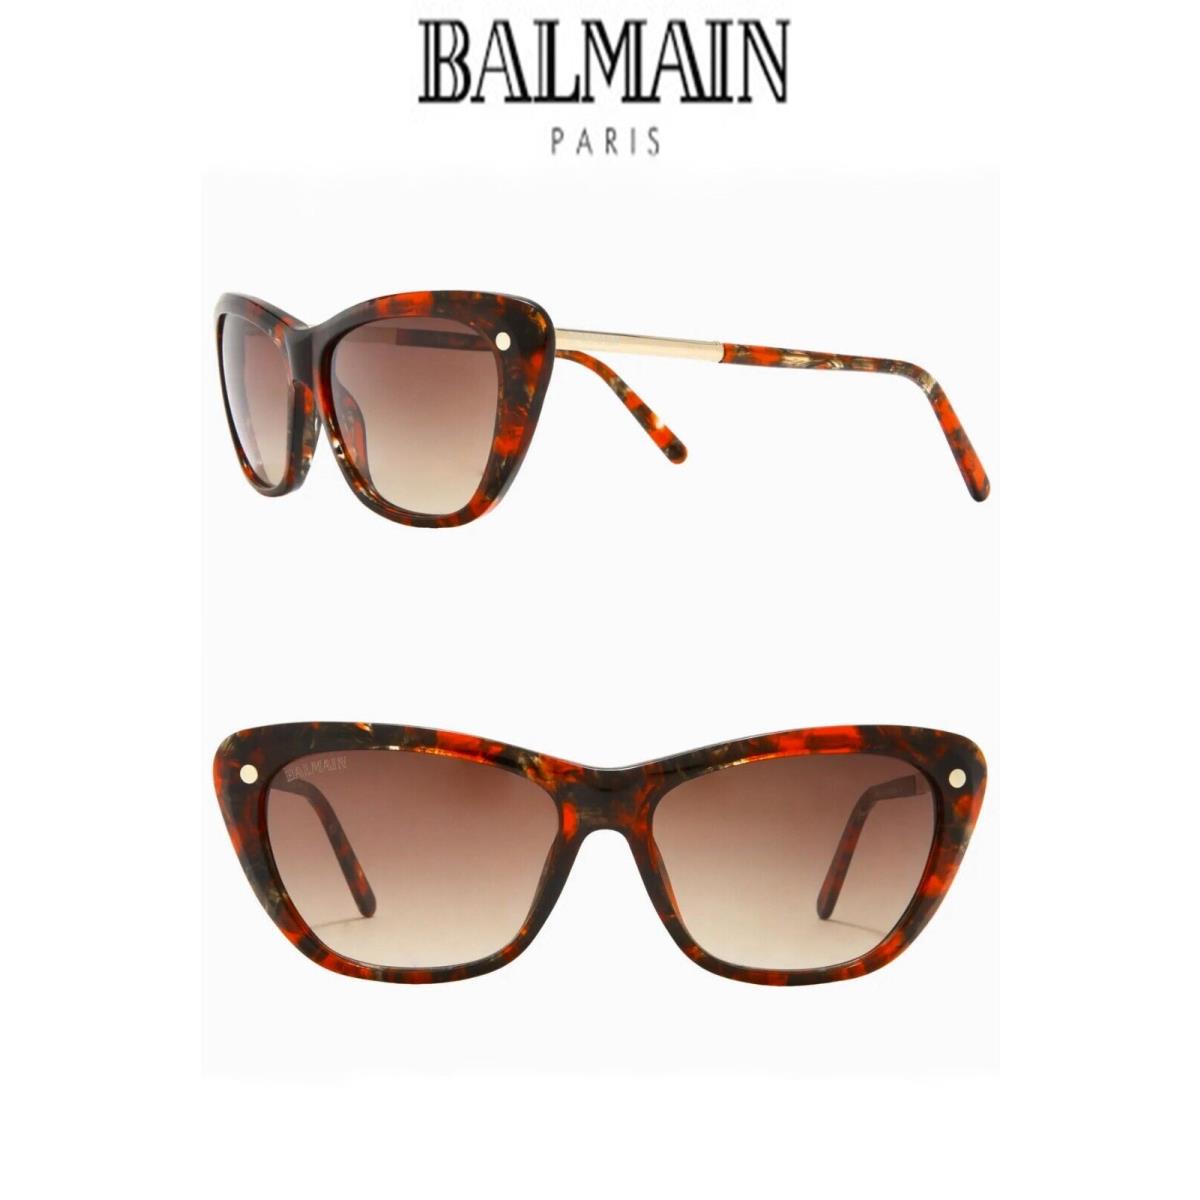 Balmain Paris BL2069 C03 Red Tortoise Gradient Brown Cat Eye Sunglasses. 56 mm